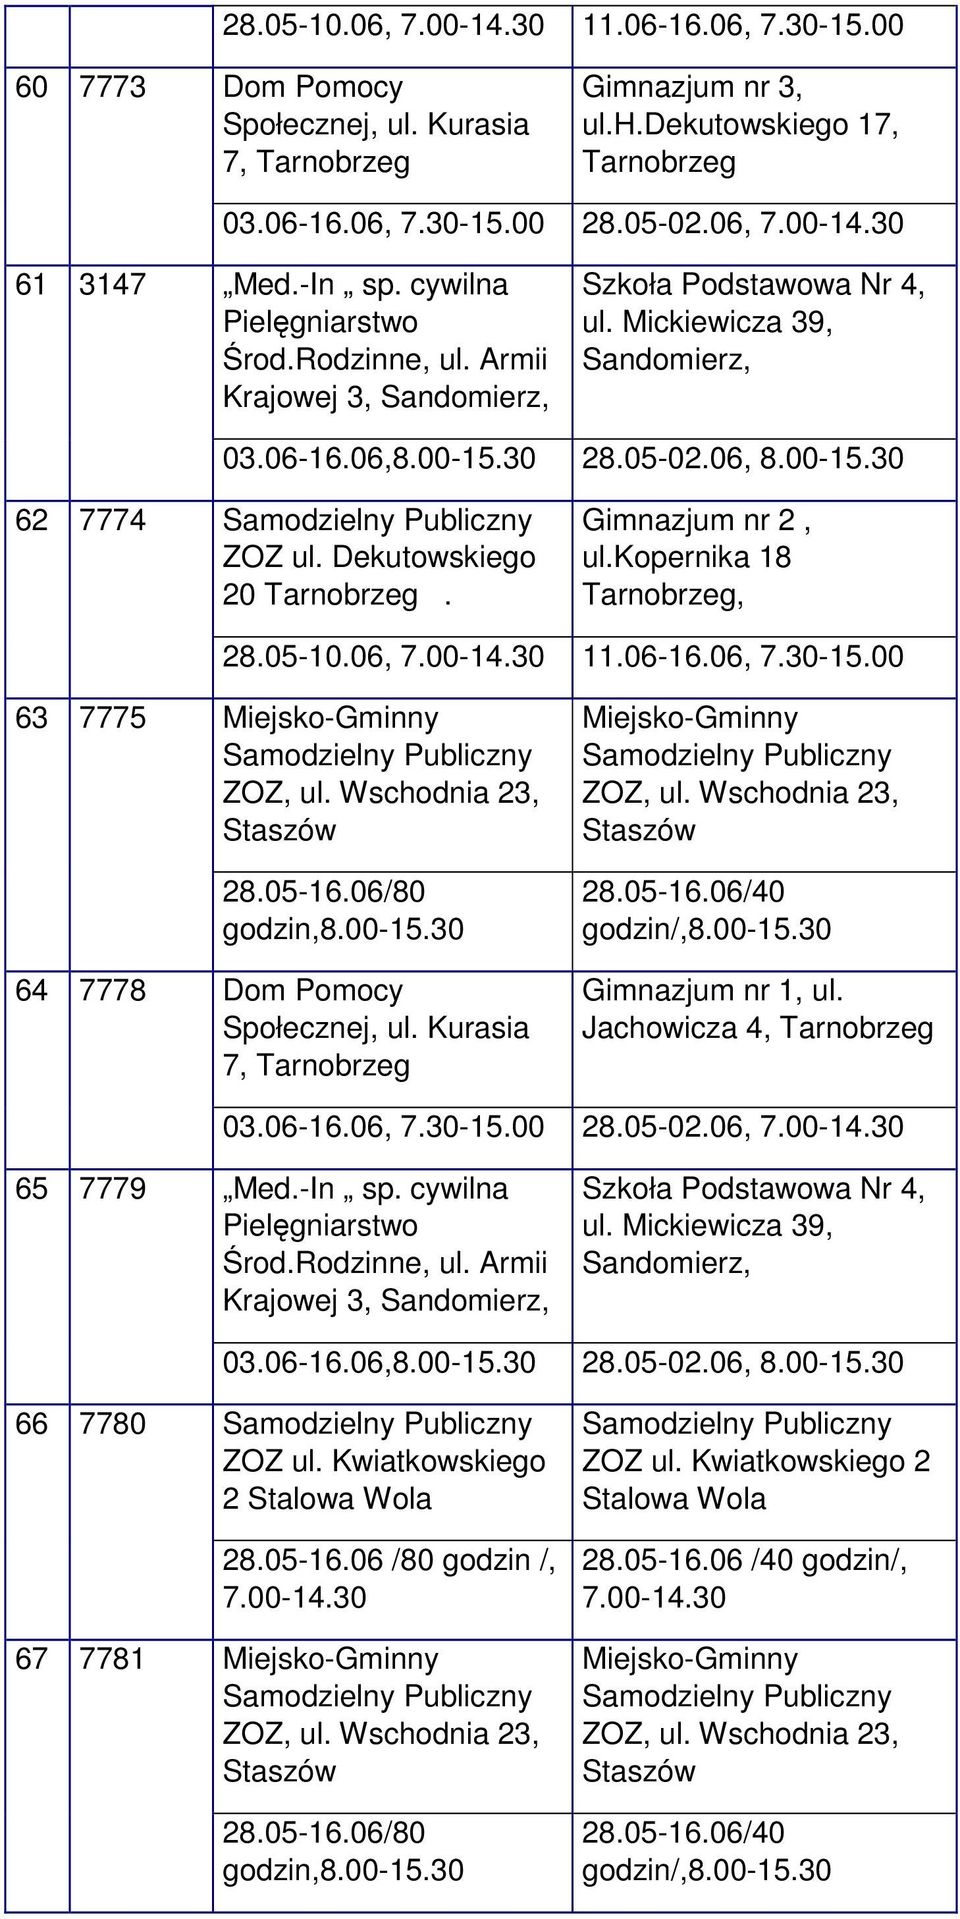 Gimnazjum nr 2, ul.kopernika 18, 28.05-10.06, 11.06-16.